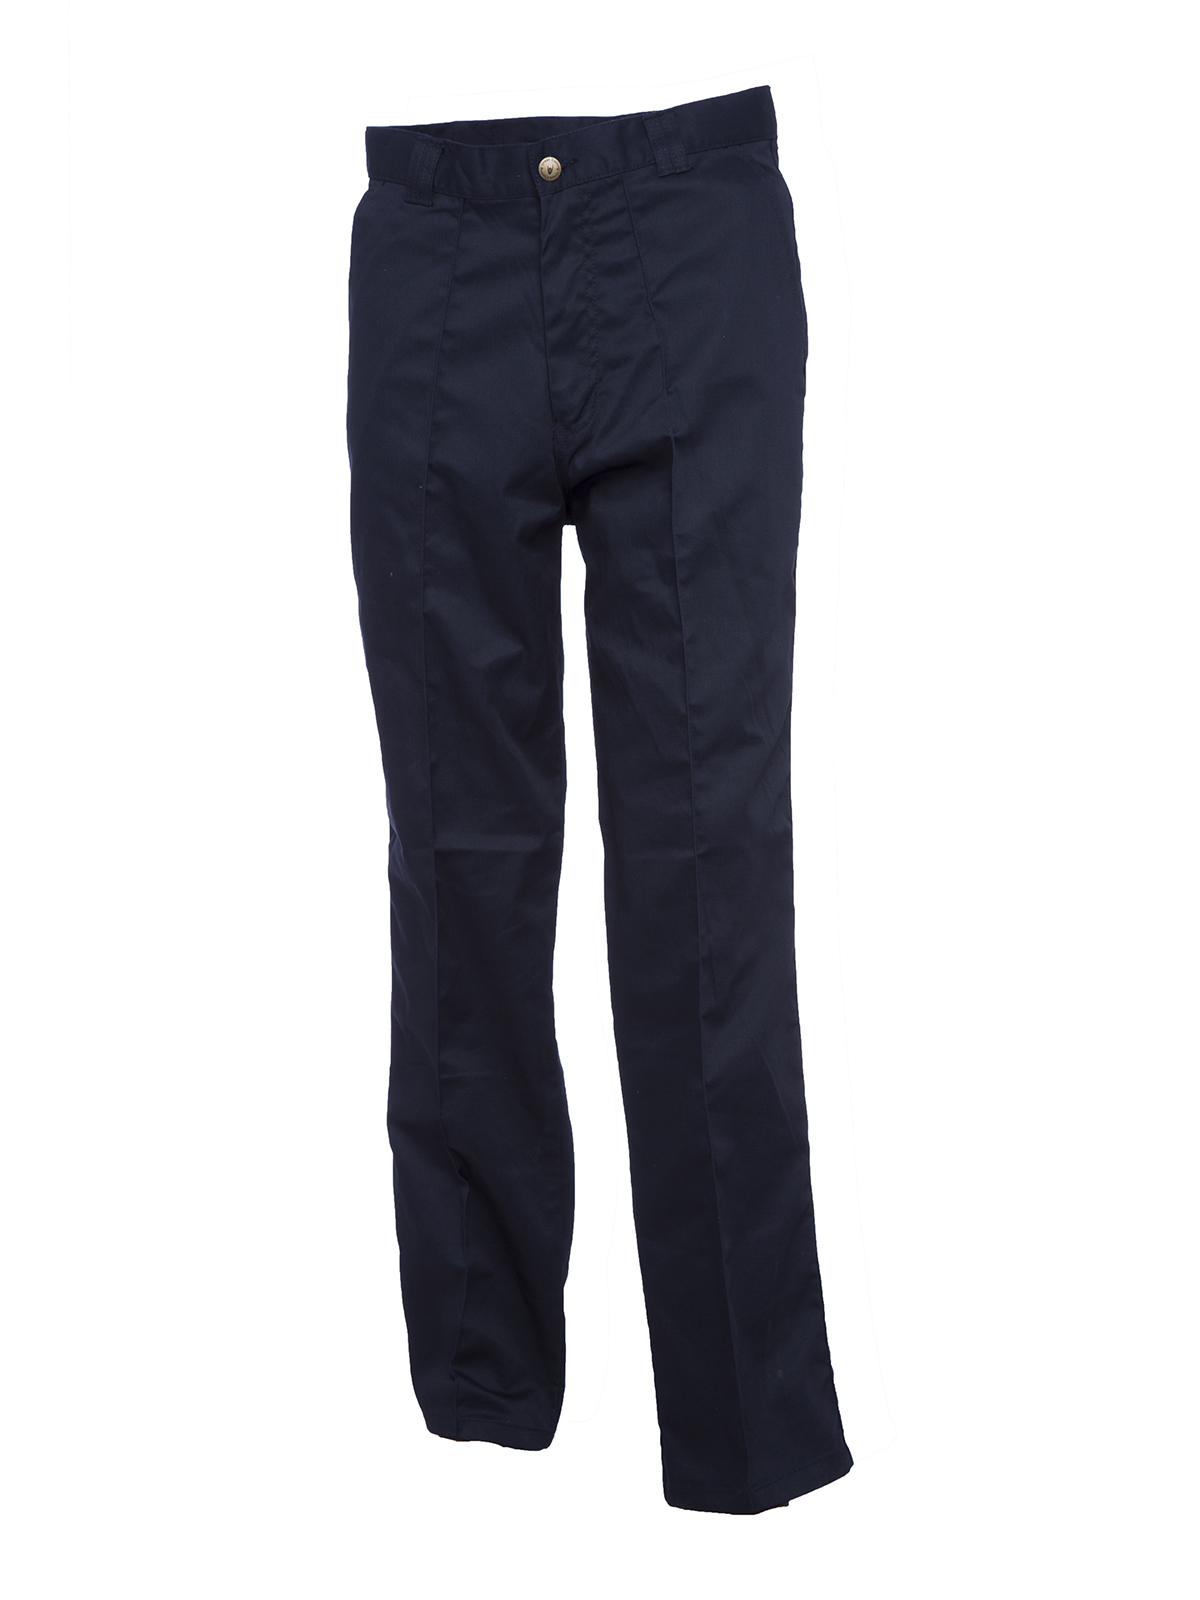 Workwear Trousers, Navy Blue - 44L